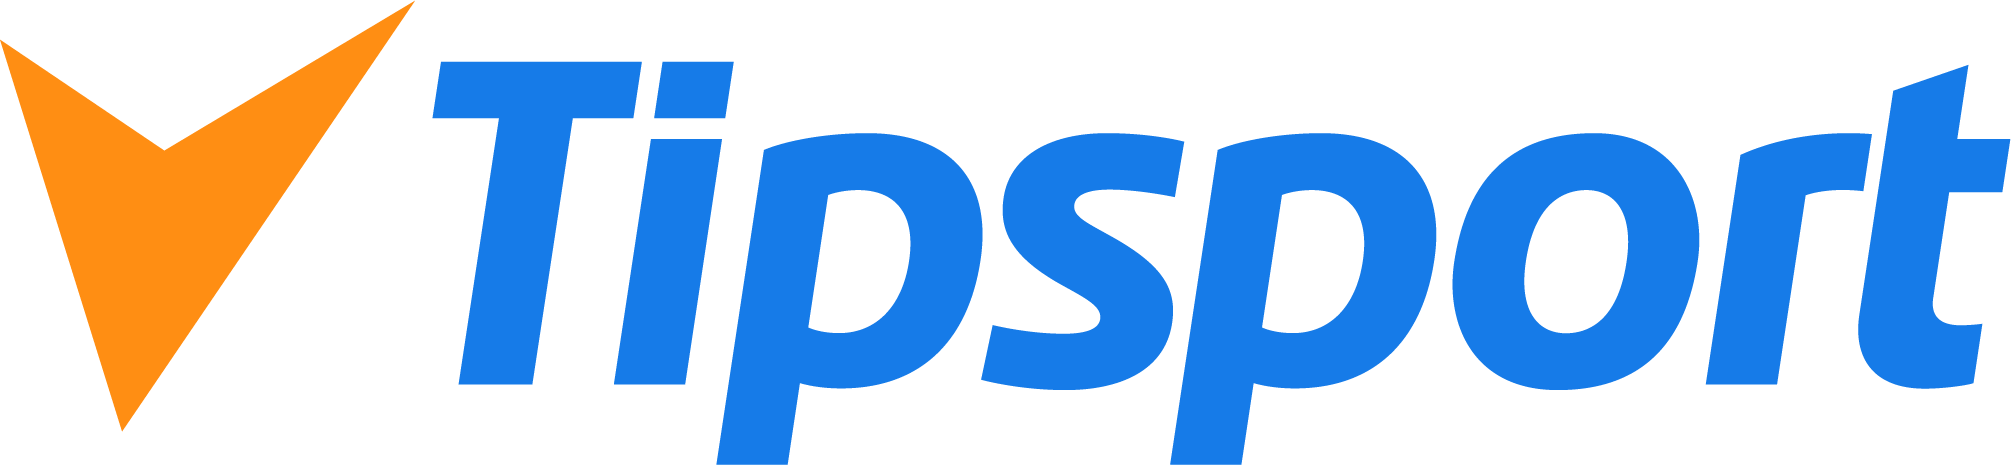 logo Tipsport